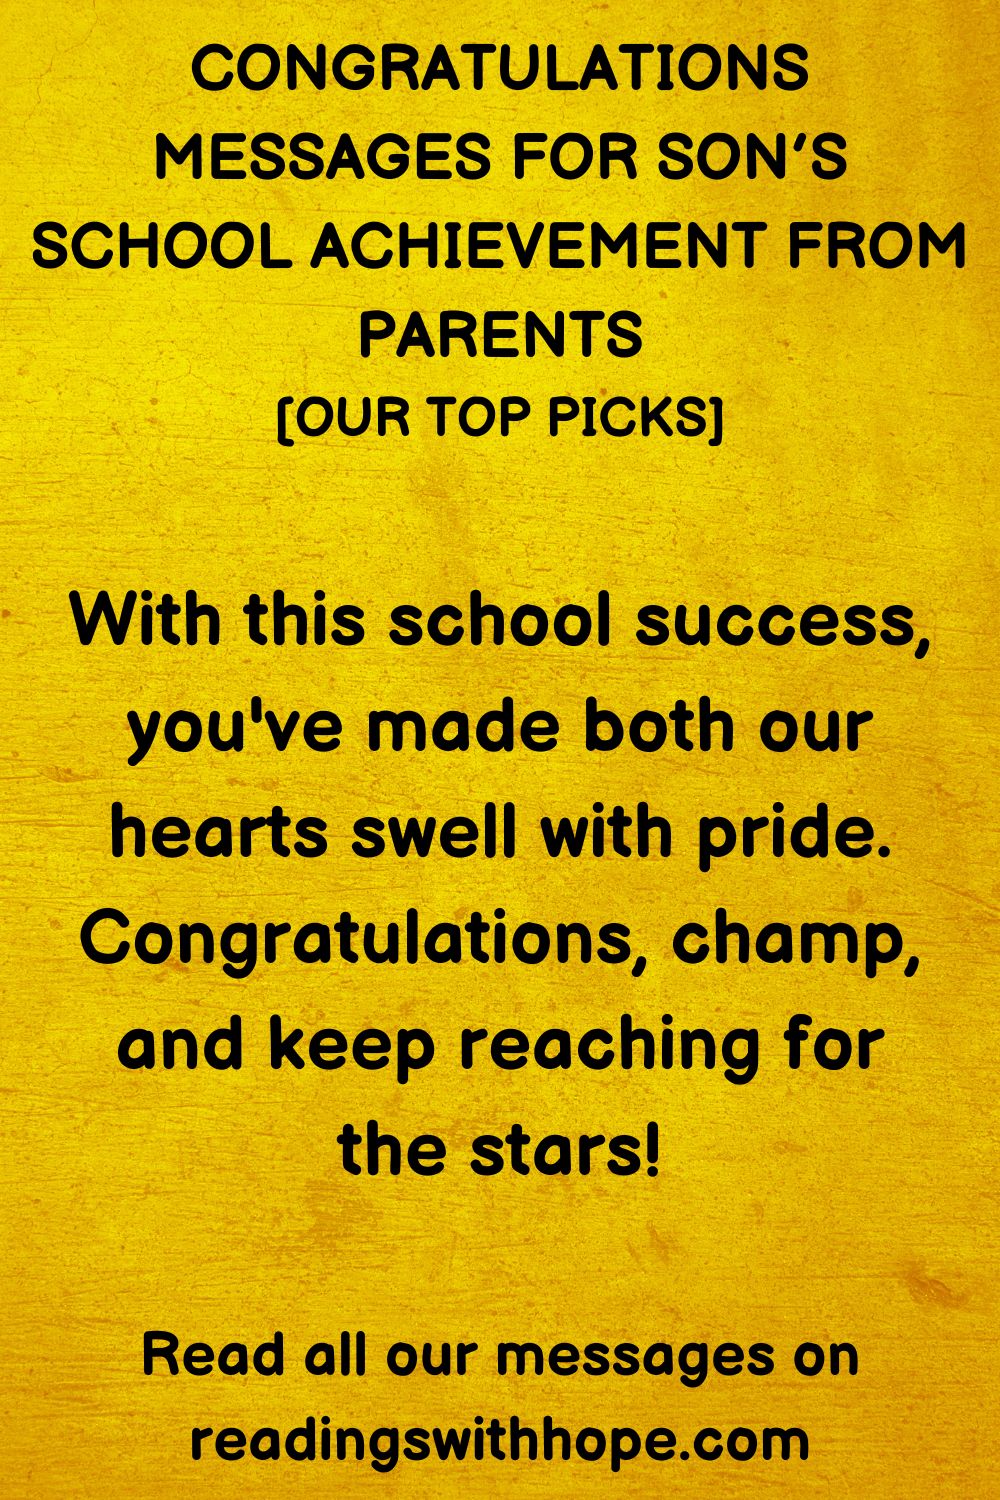 Congratulations Message for Son’s School Achievement From Parents
